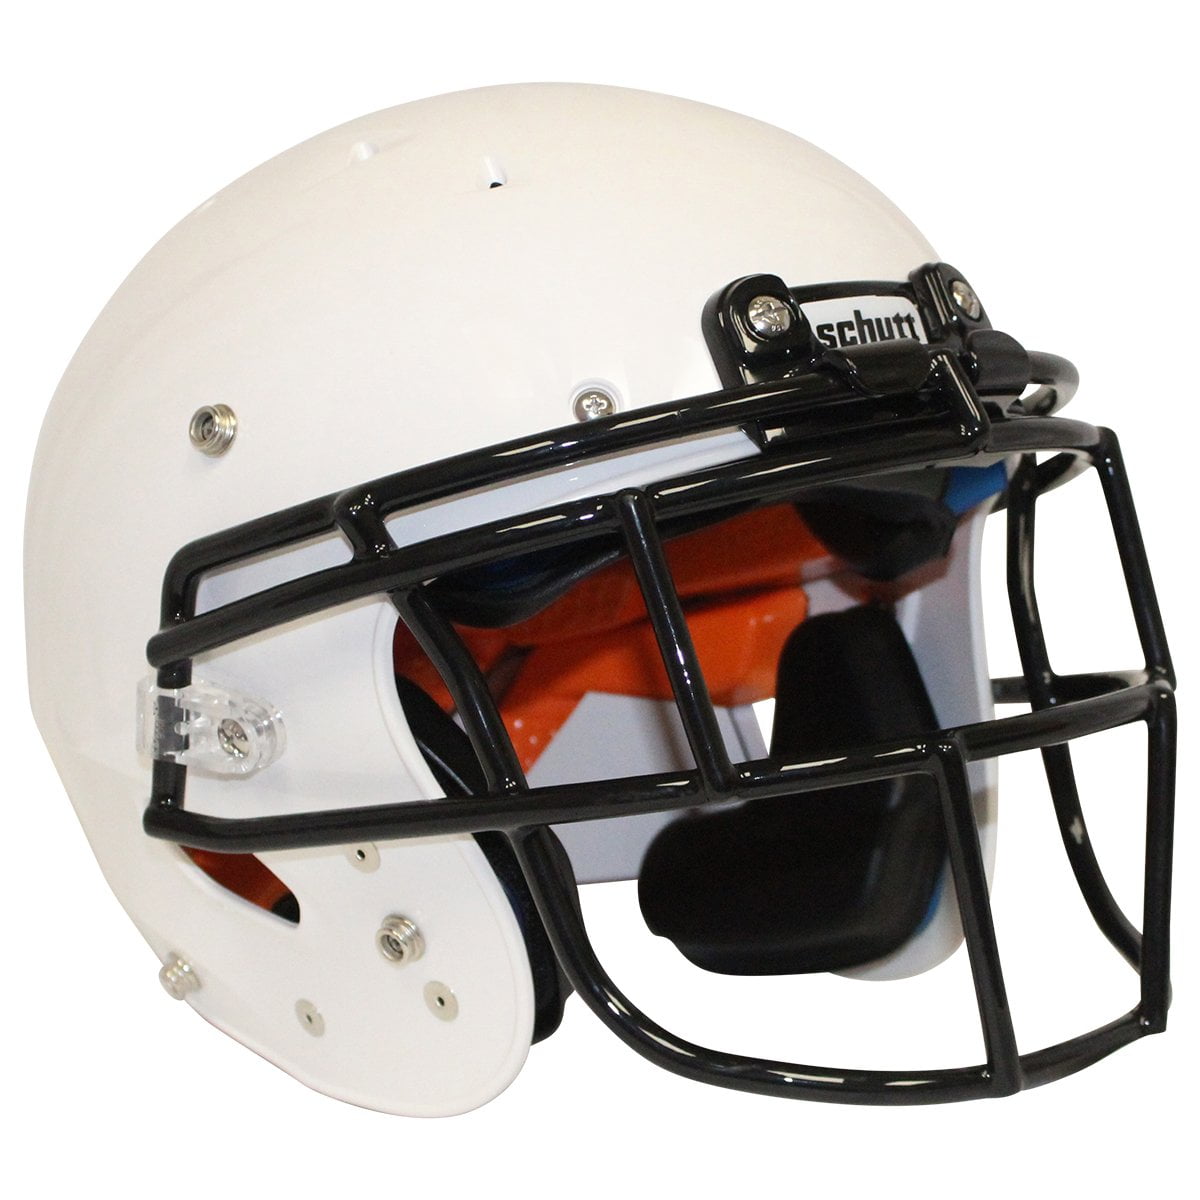 Schutt Recruit Hybrid Youth Football Helmet 